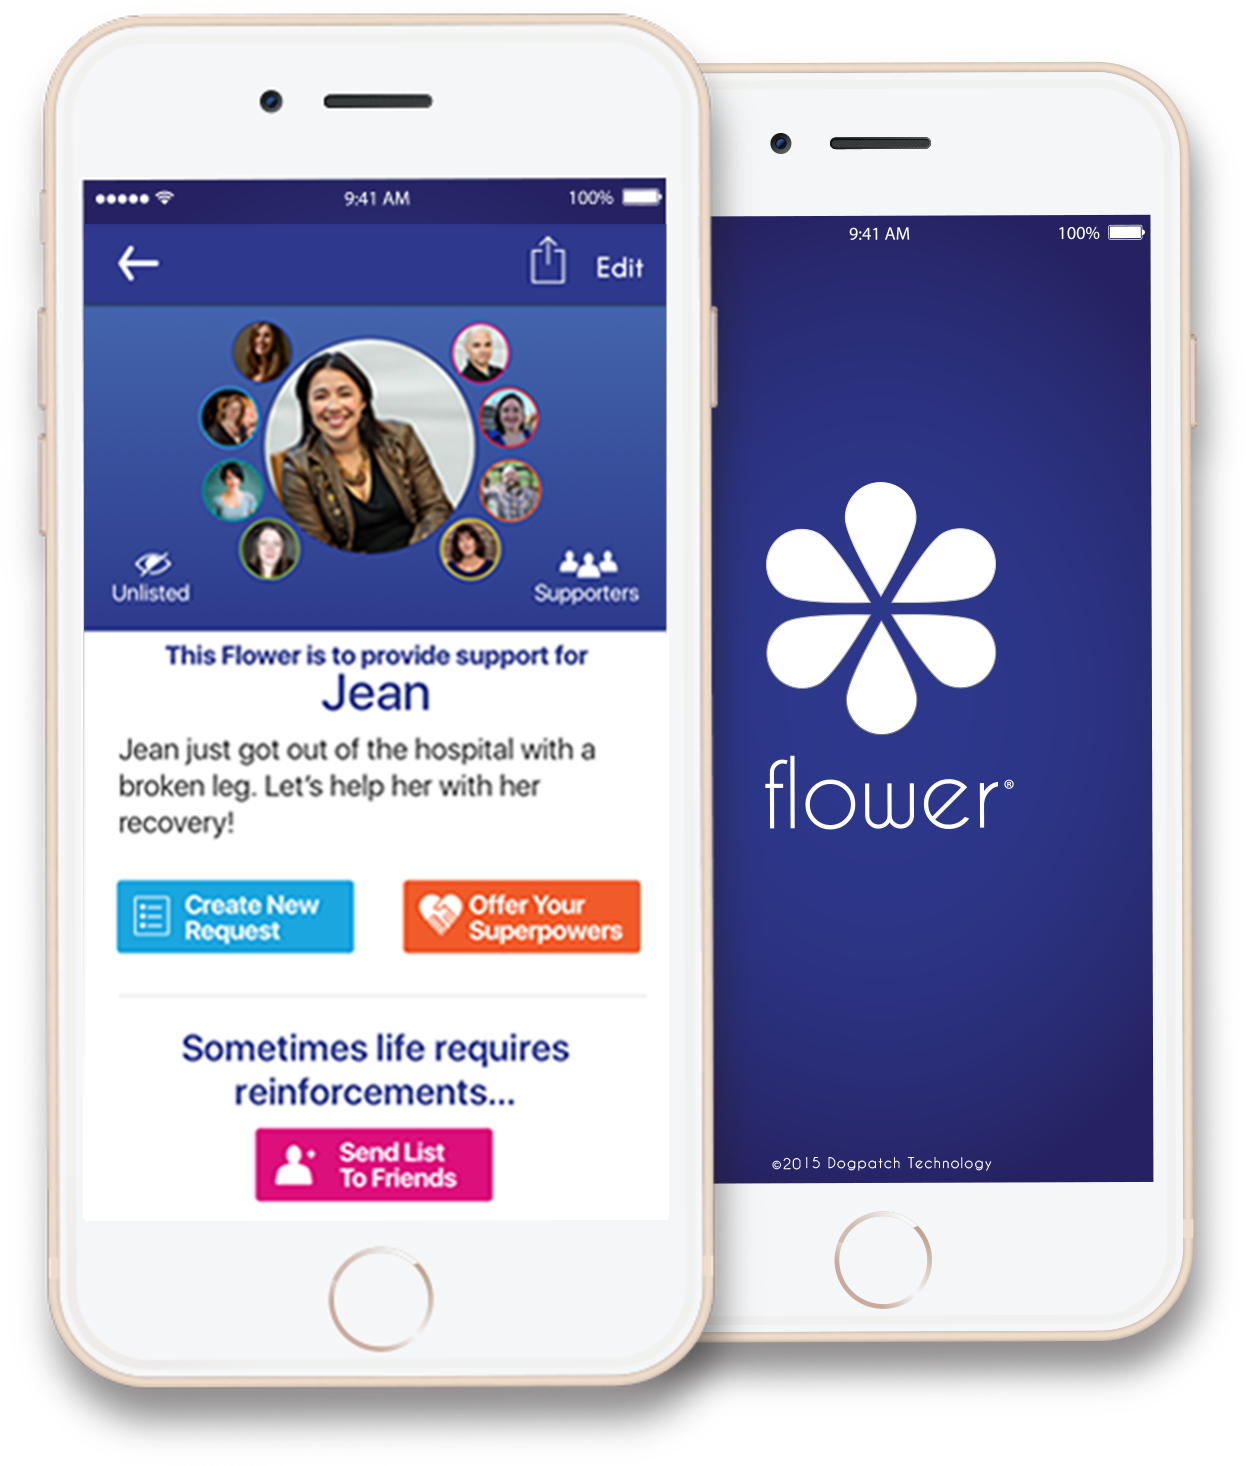 Flower app helps organizations gather support